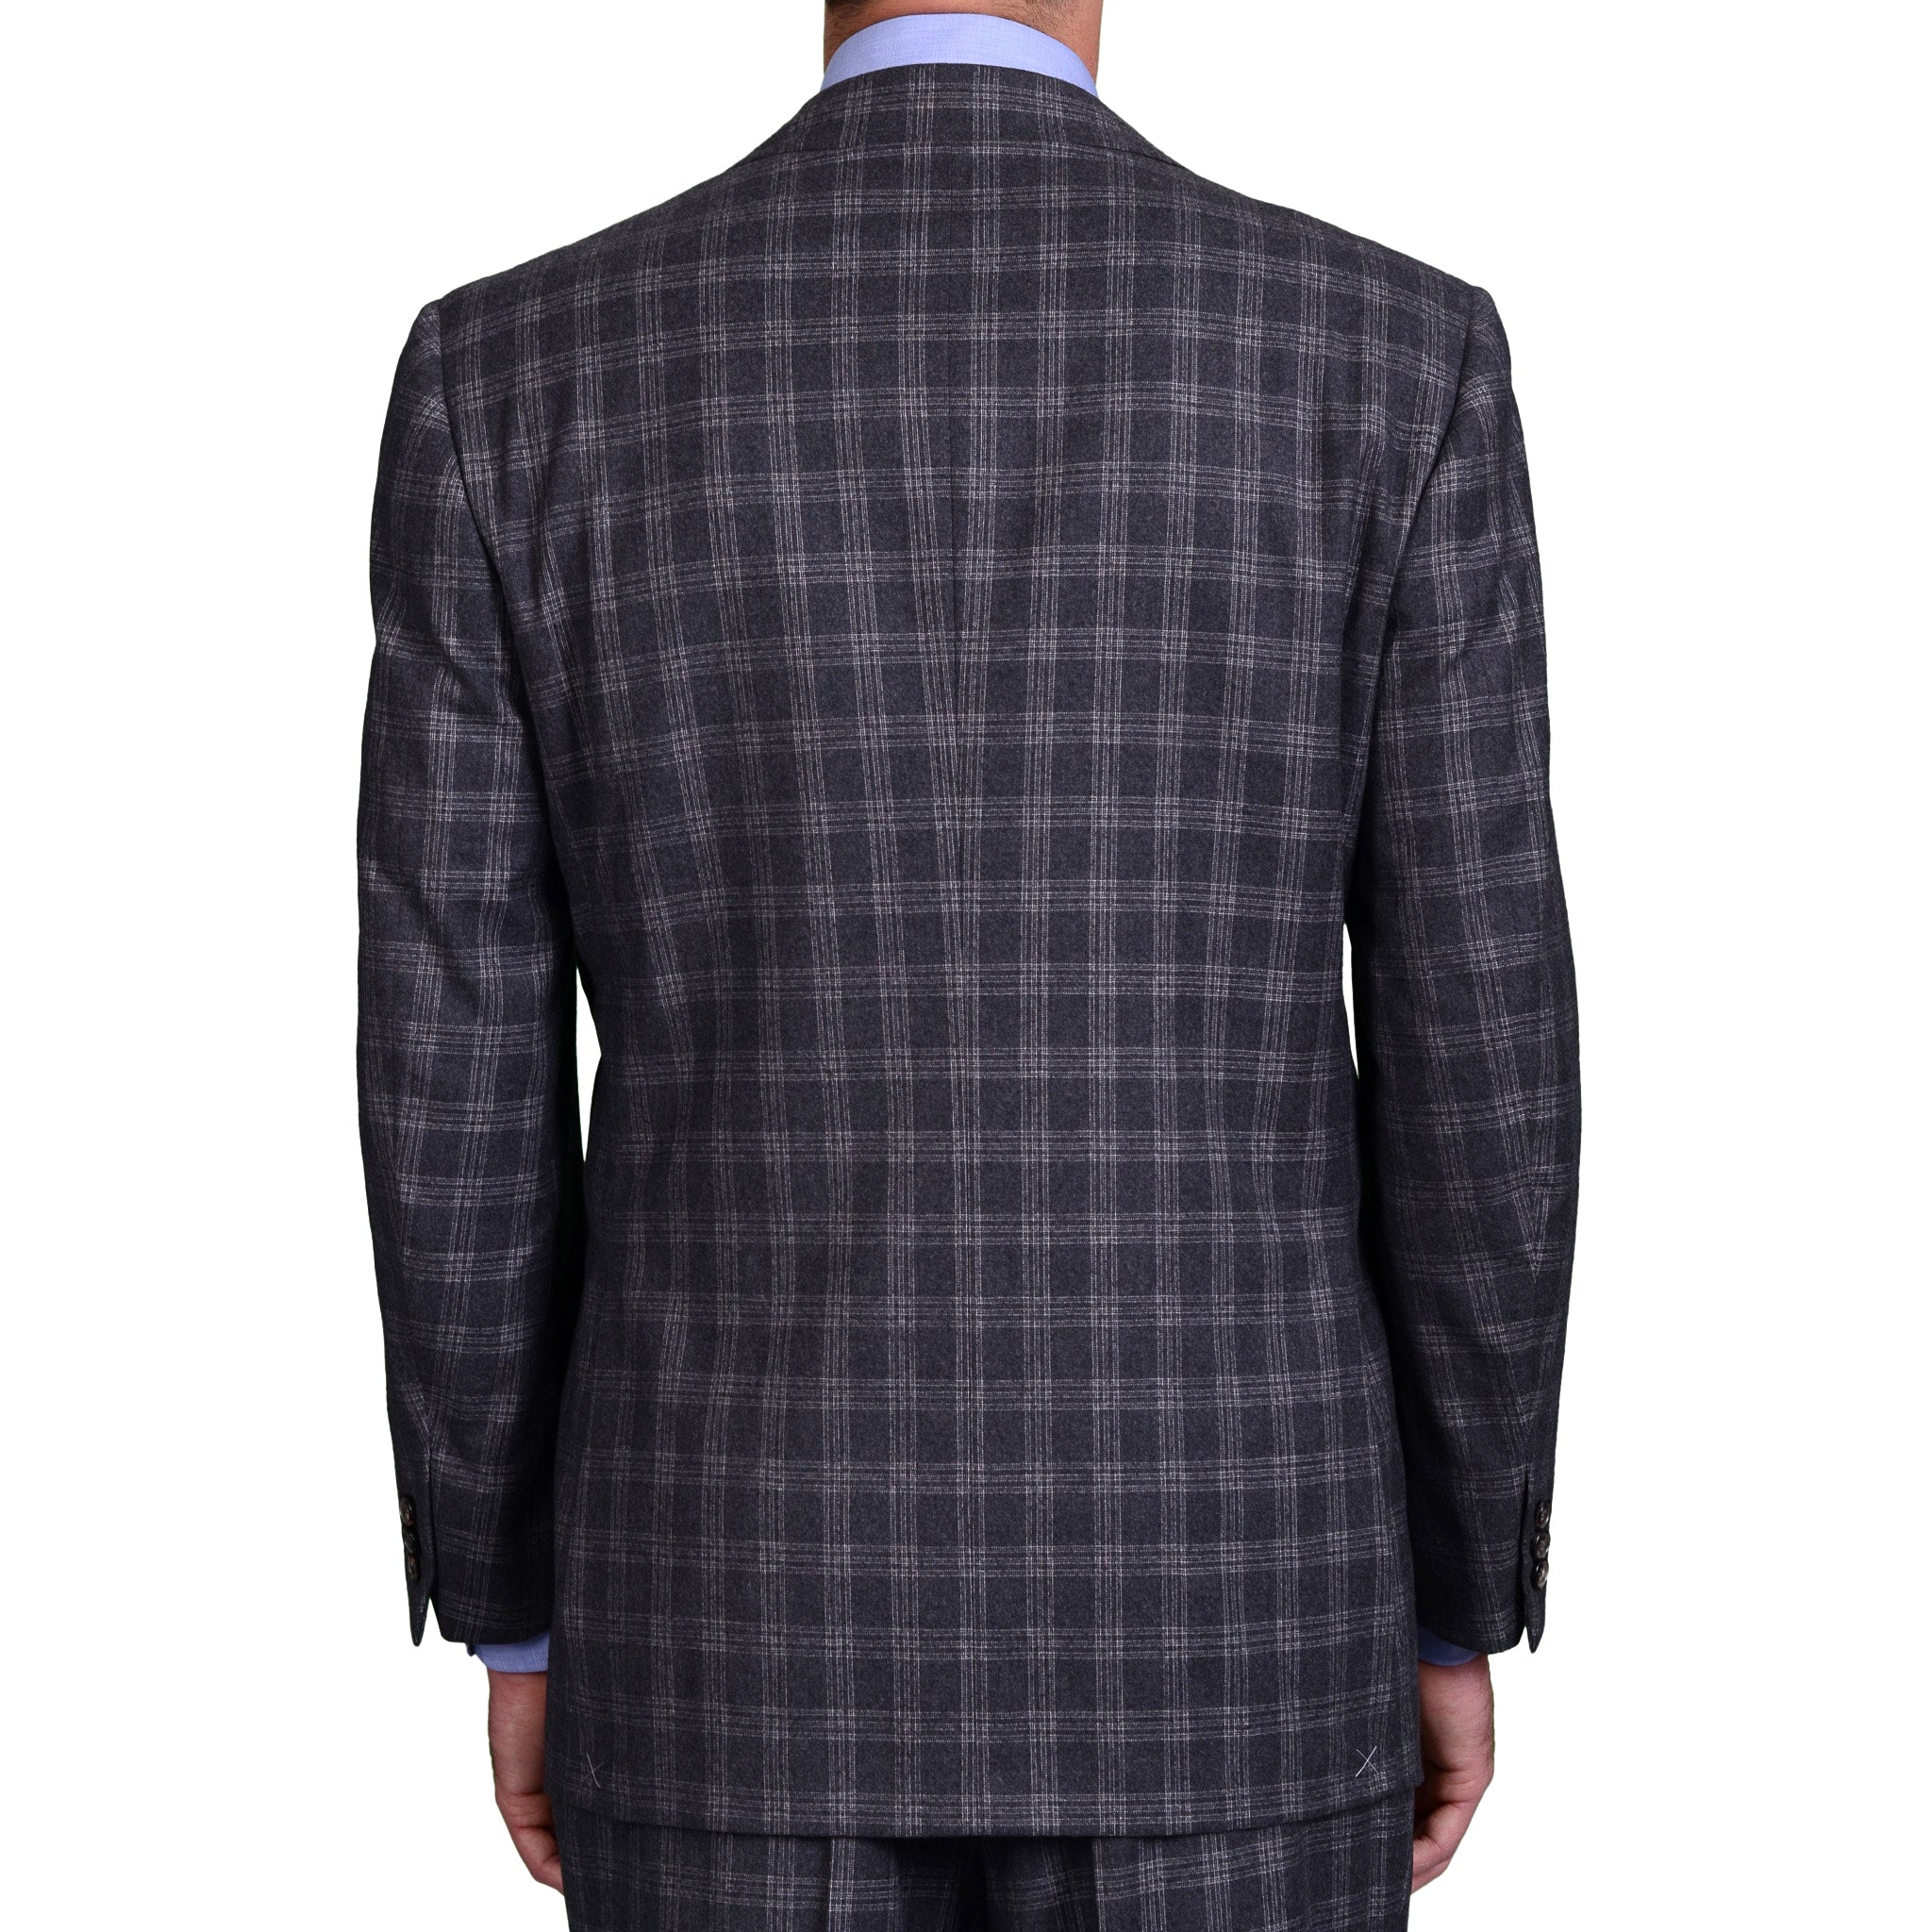 AVI ROSSINI Handmade Gray Super 120's Flannel Suit Luxury EU 52 NEW US 42 AVI ROSSINI